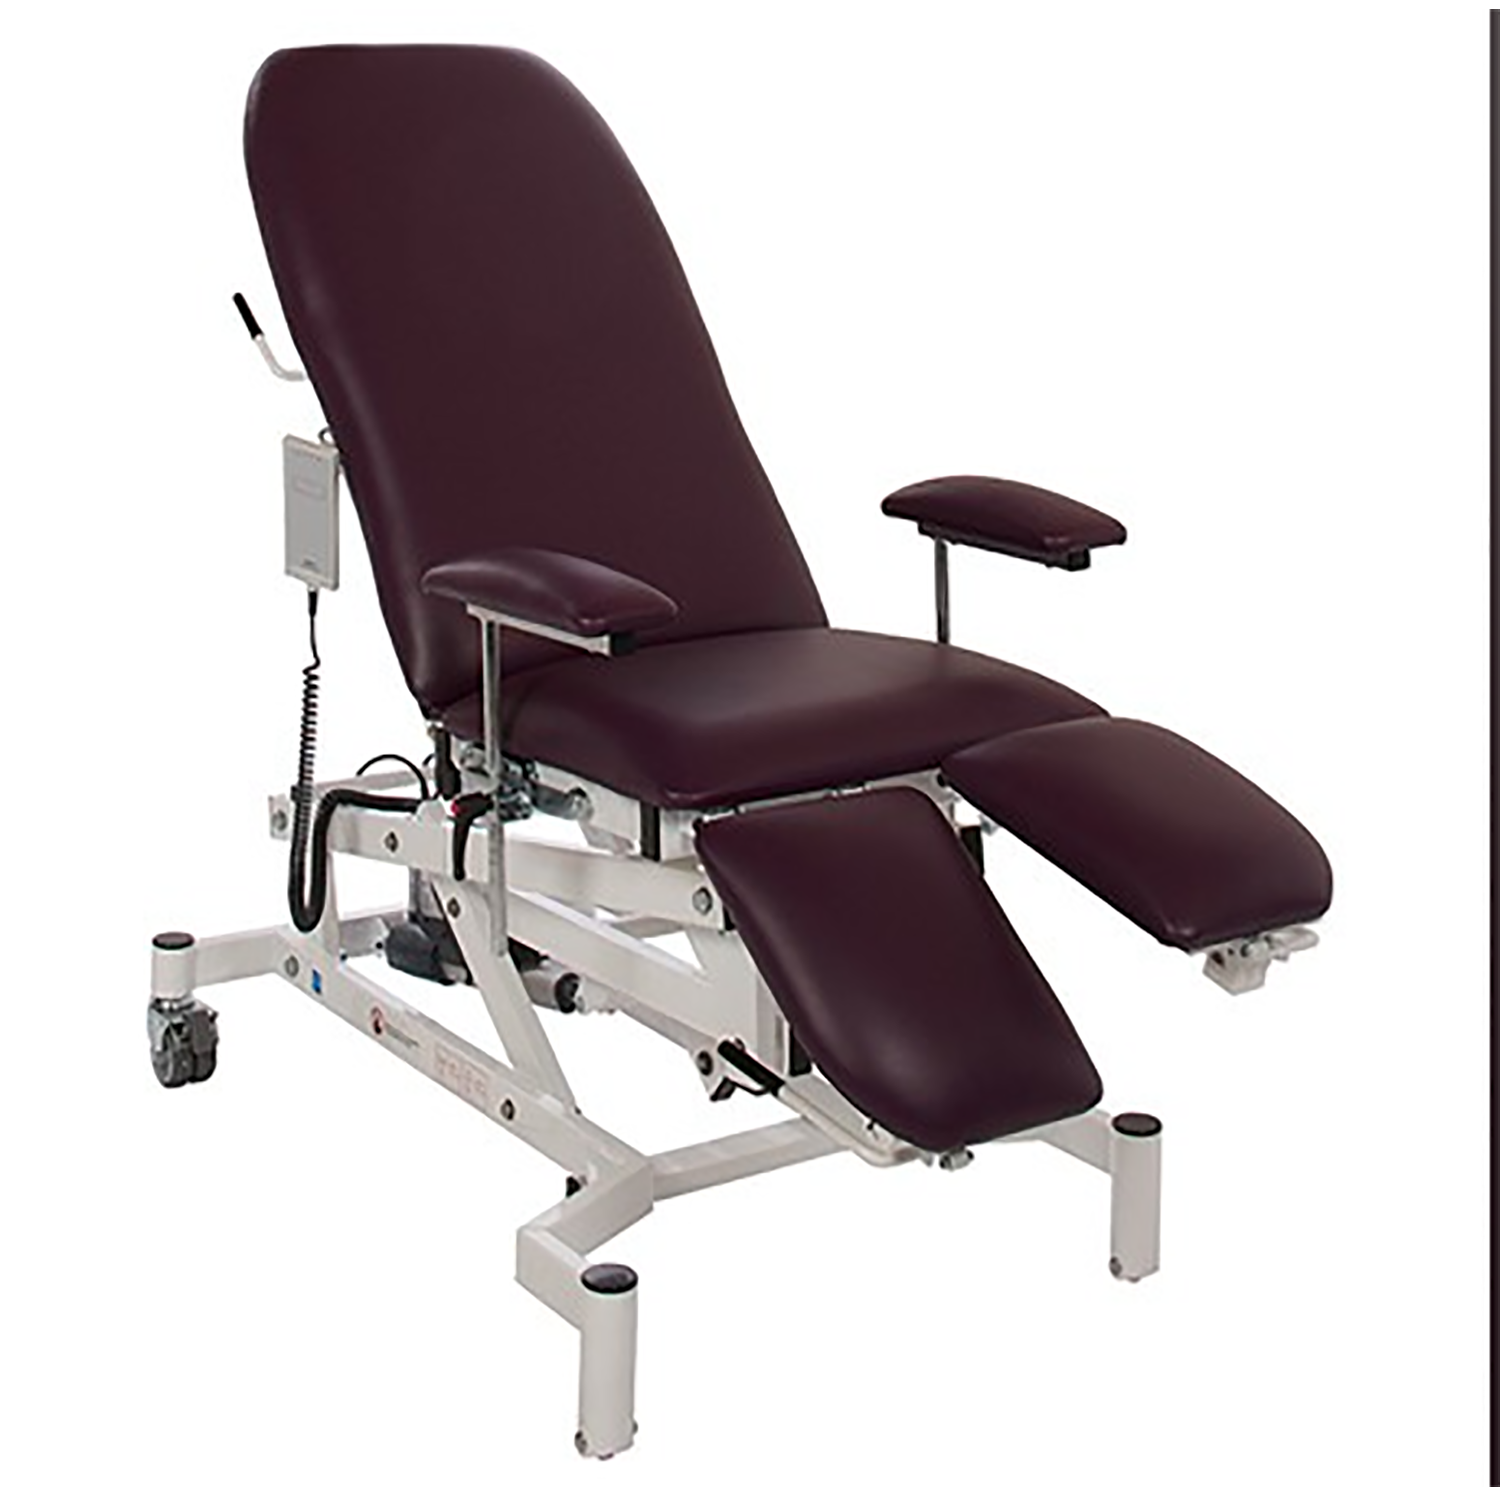 Doherty Vari-height Treatment Chair